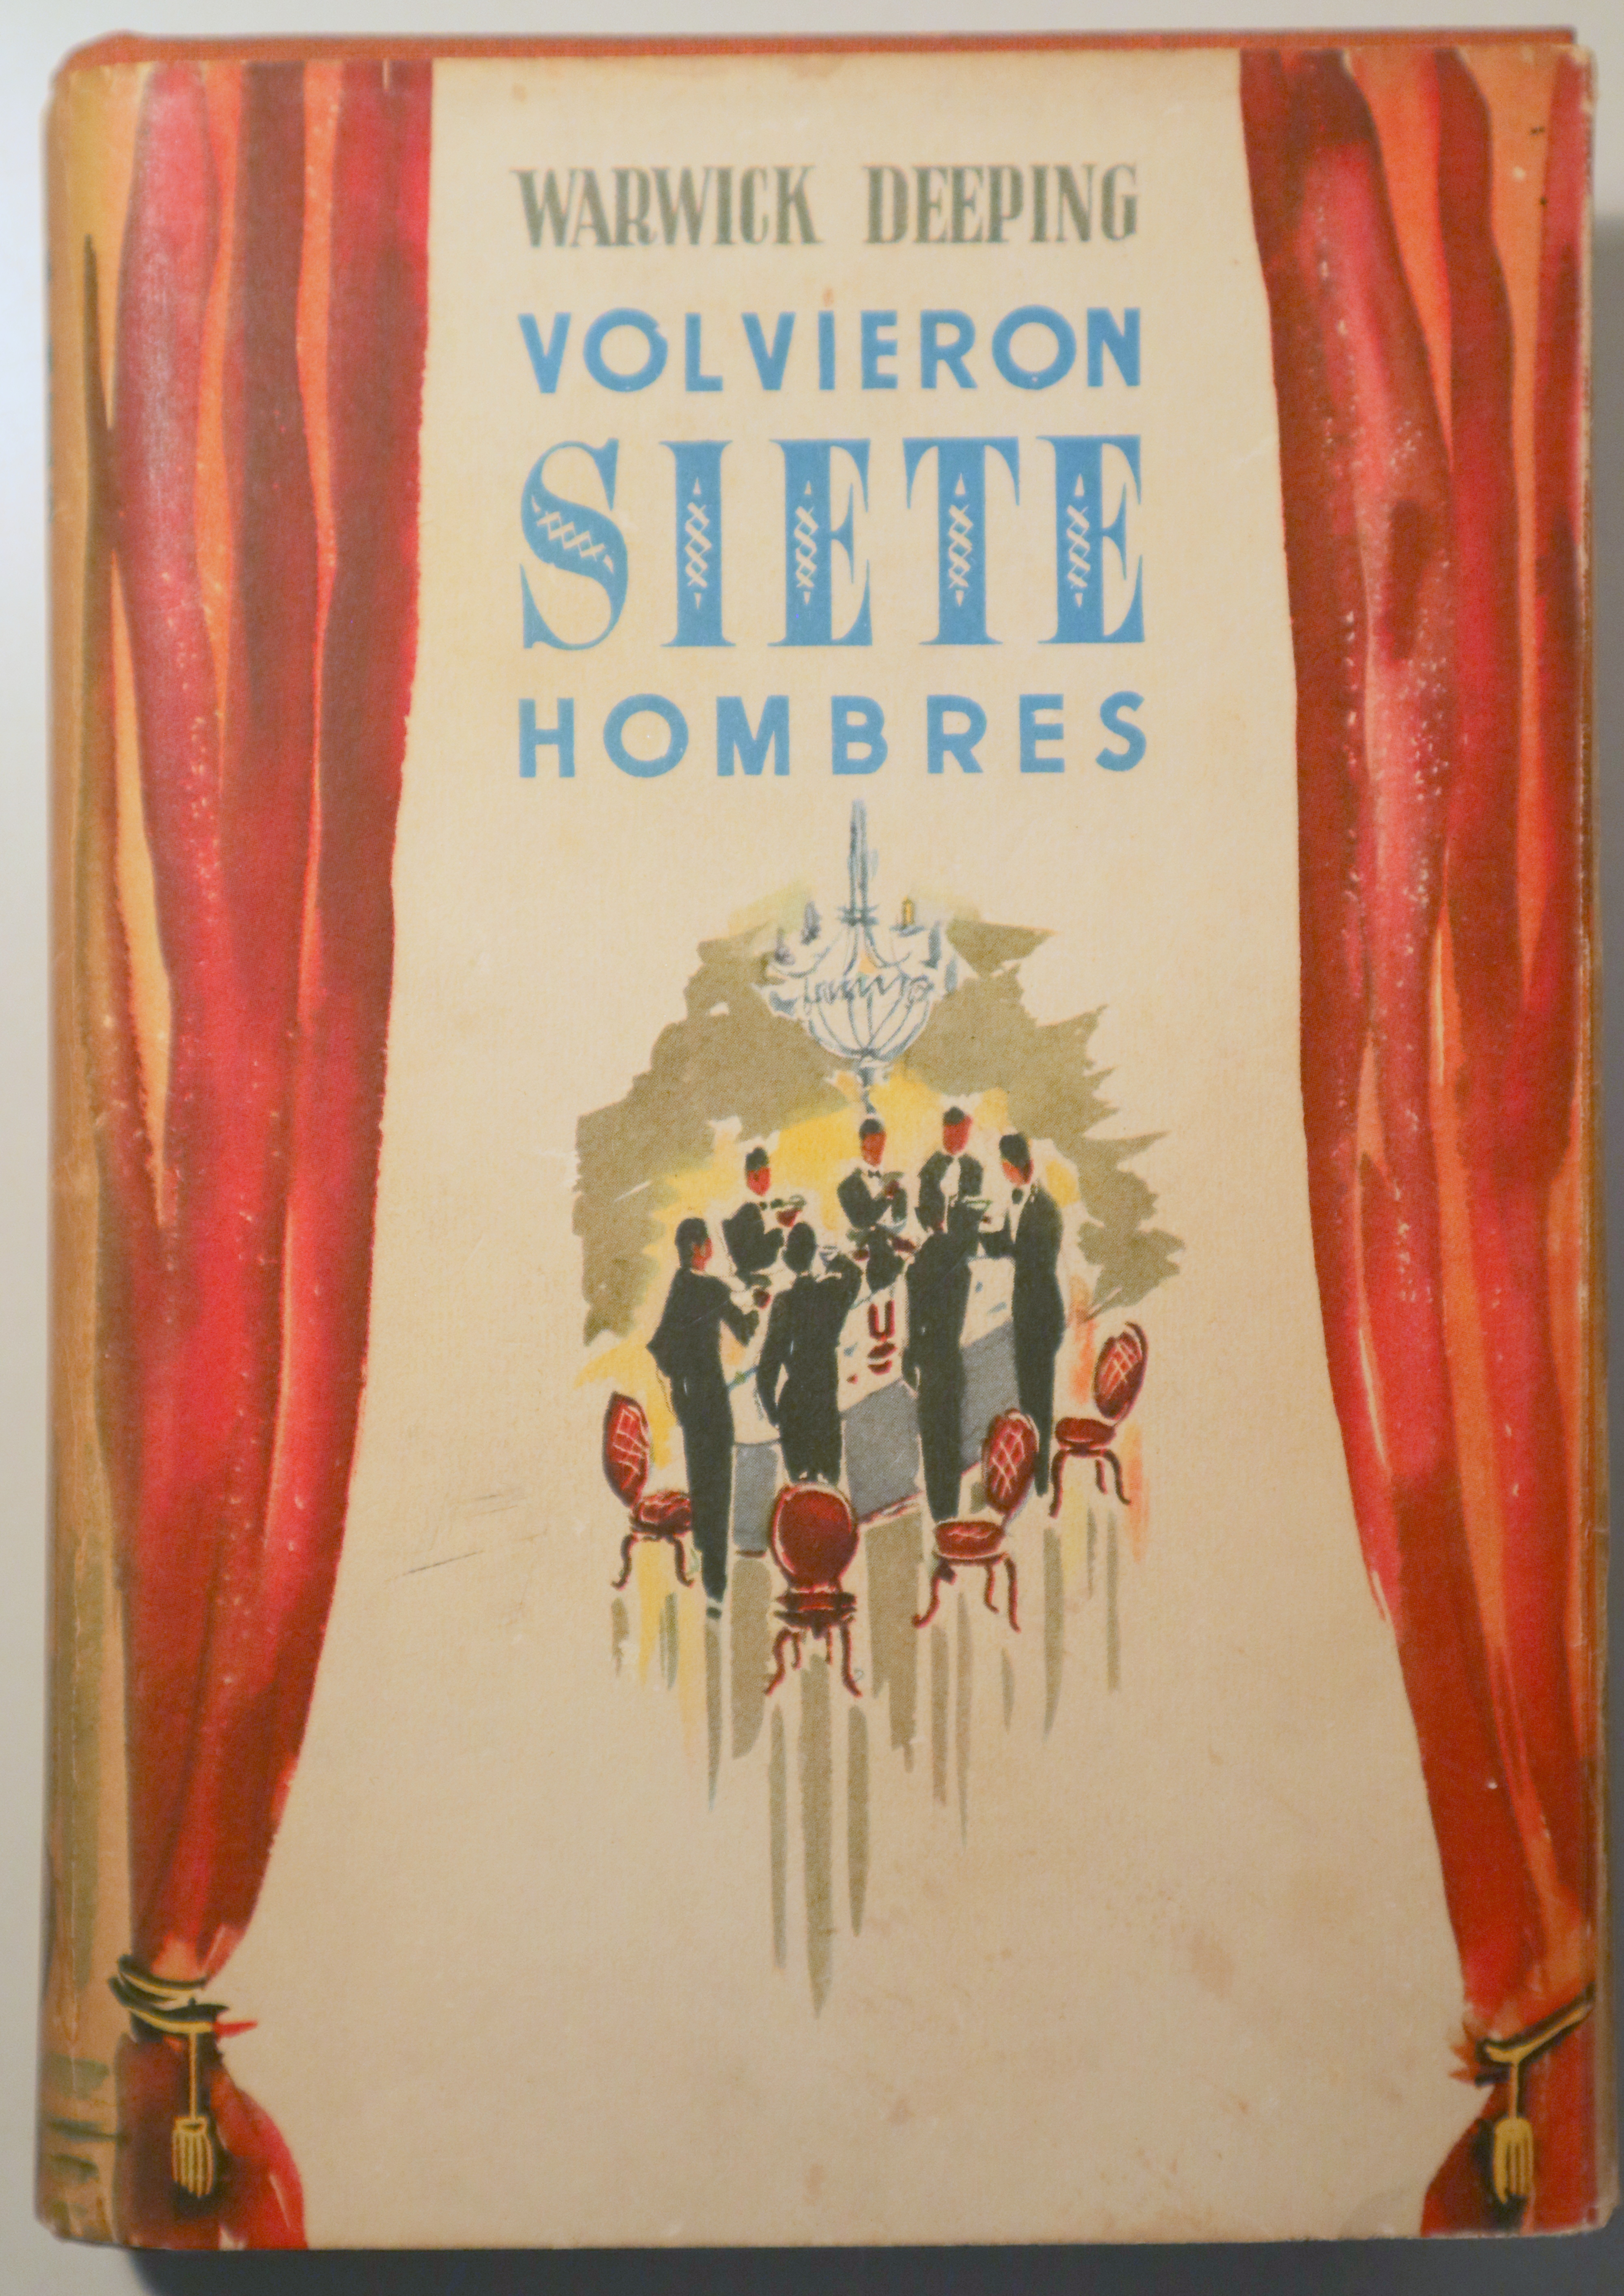 VOLVIERON SIETE HOMBRES - Barcelona 1947 - 1ª edición en español